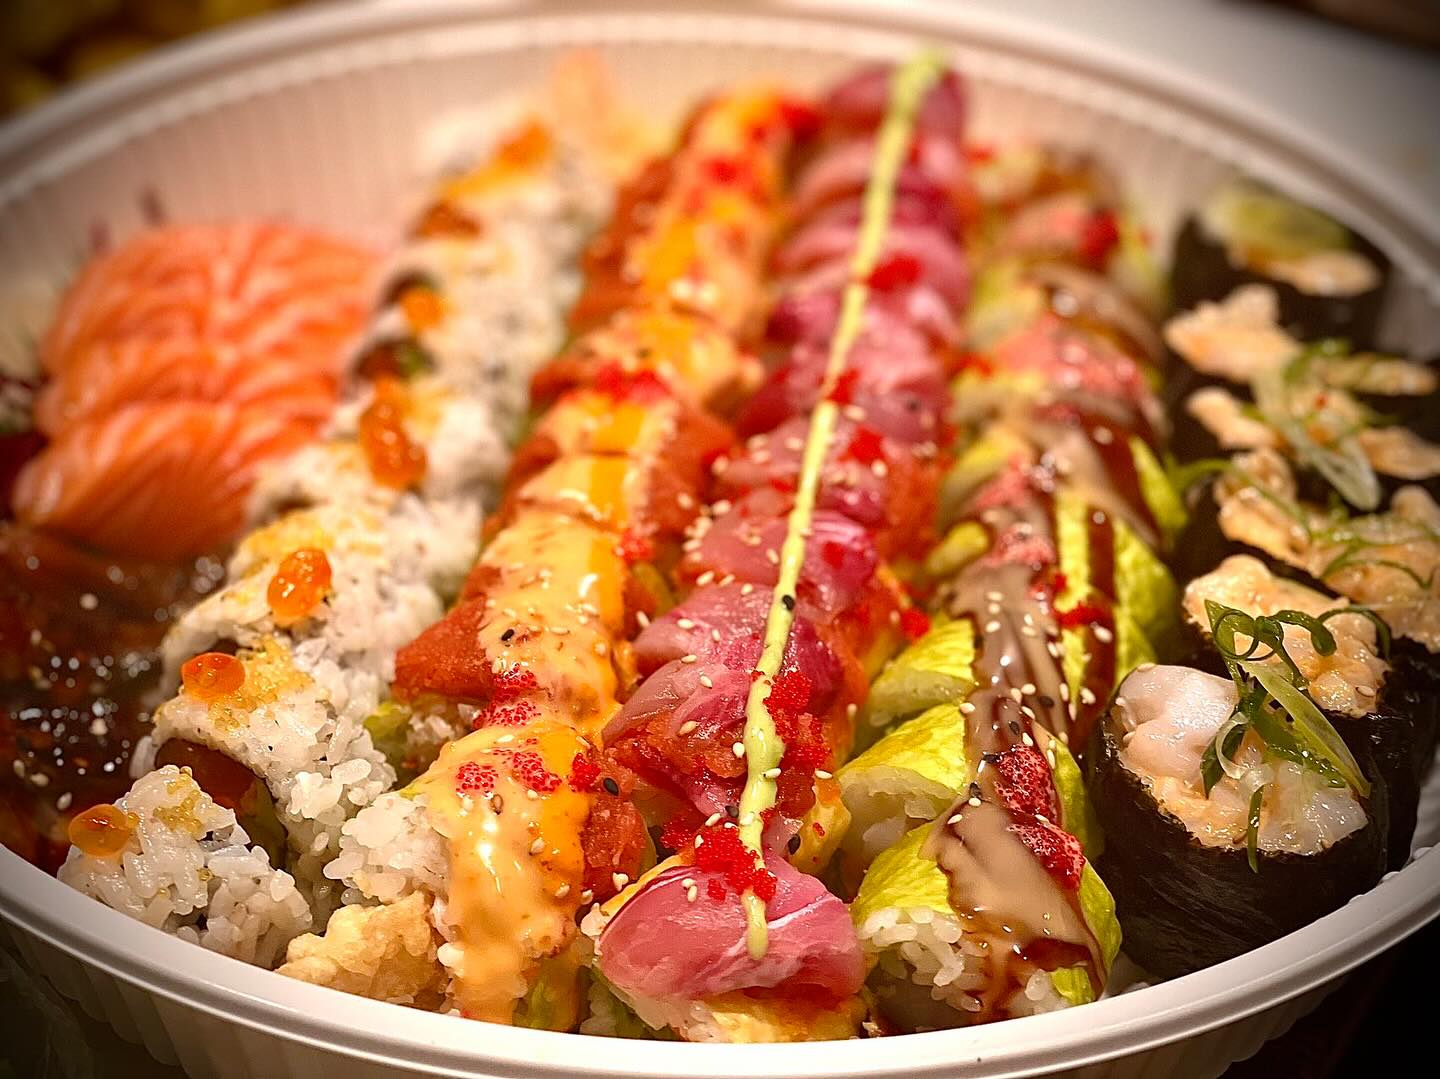 Tenka sushi